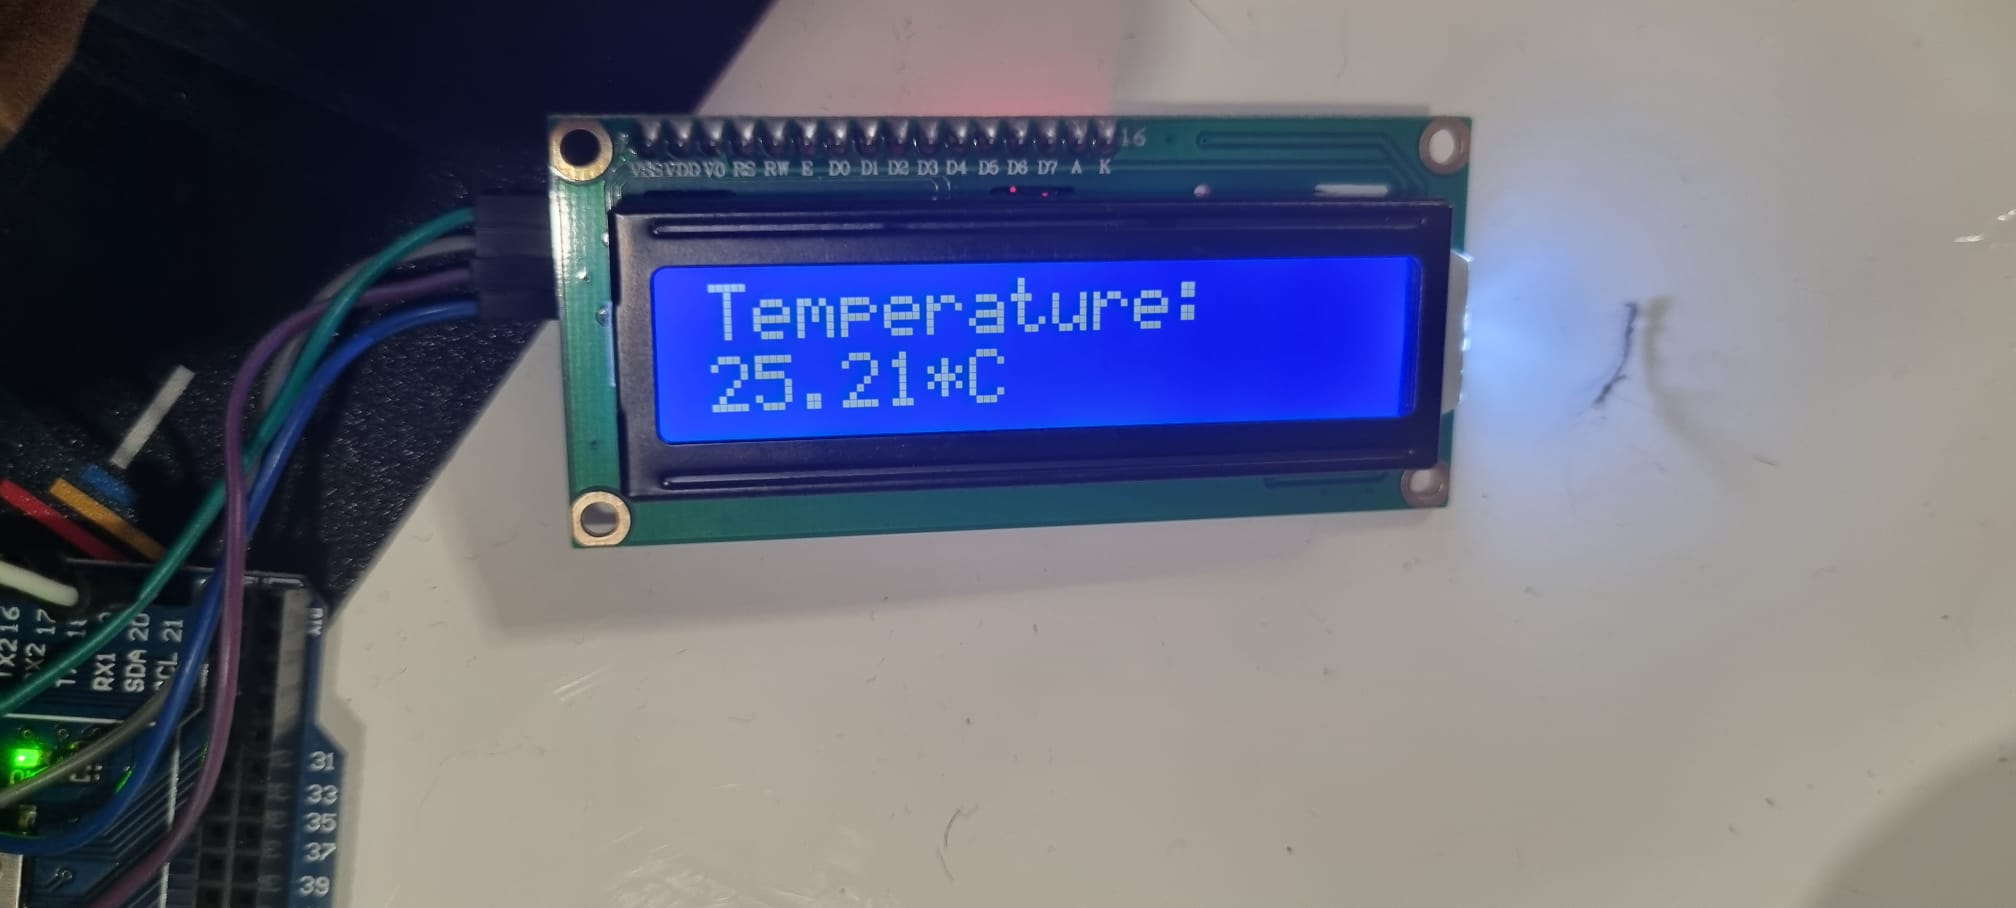 pm:prj2023:pm_temperature.jpg